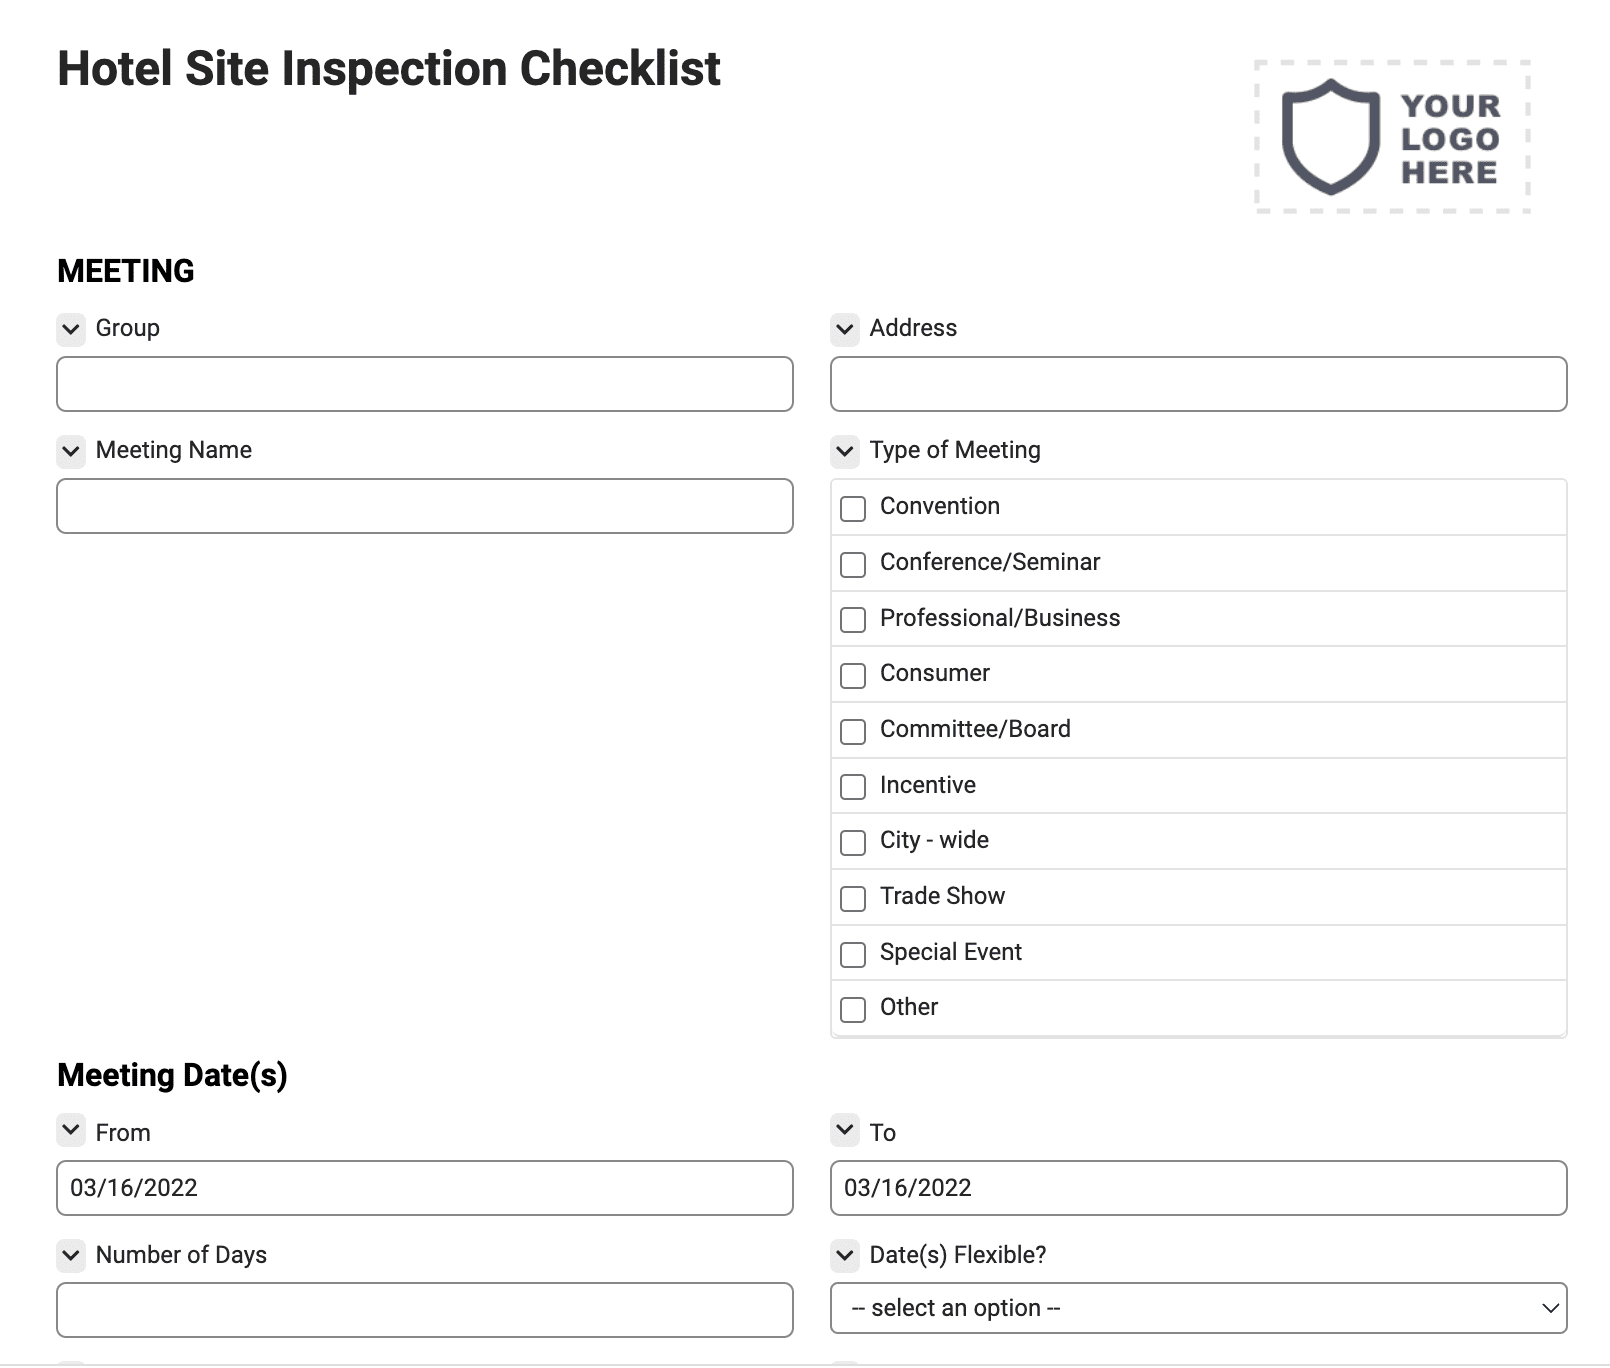 Hotel Site Inspection Checklist